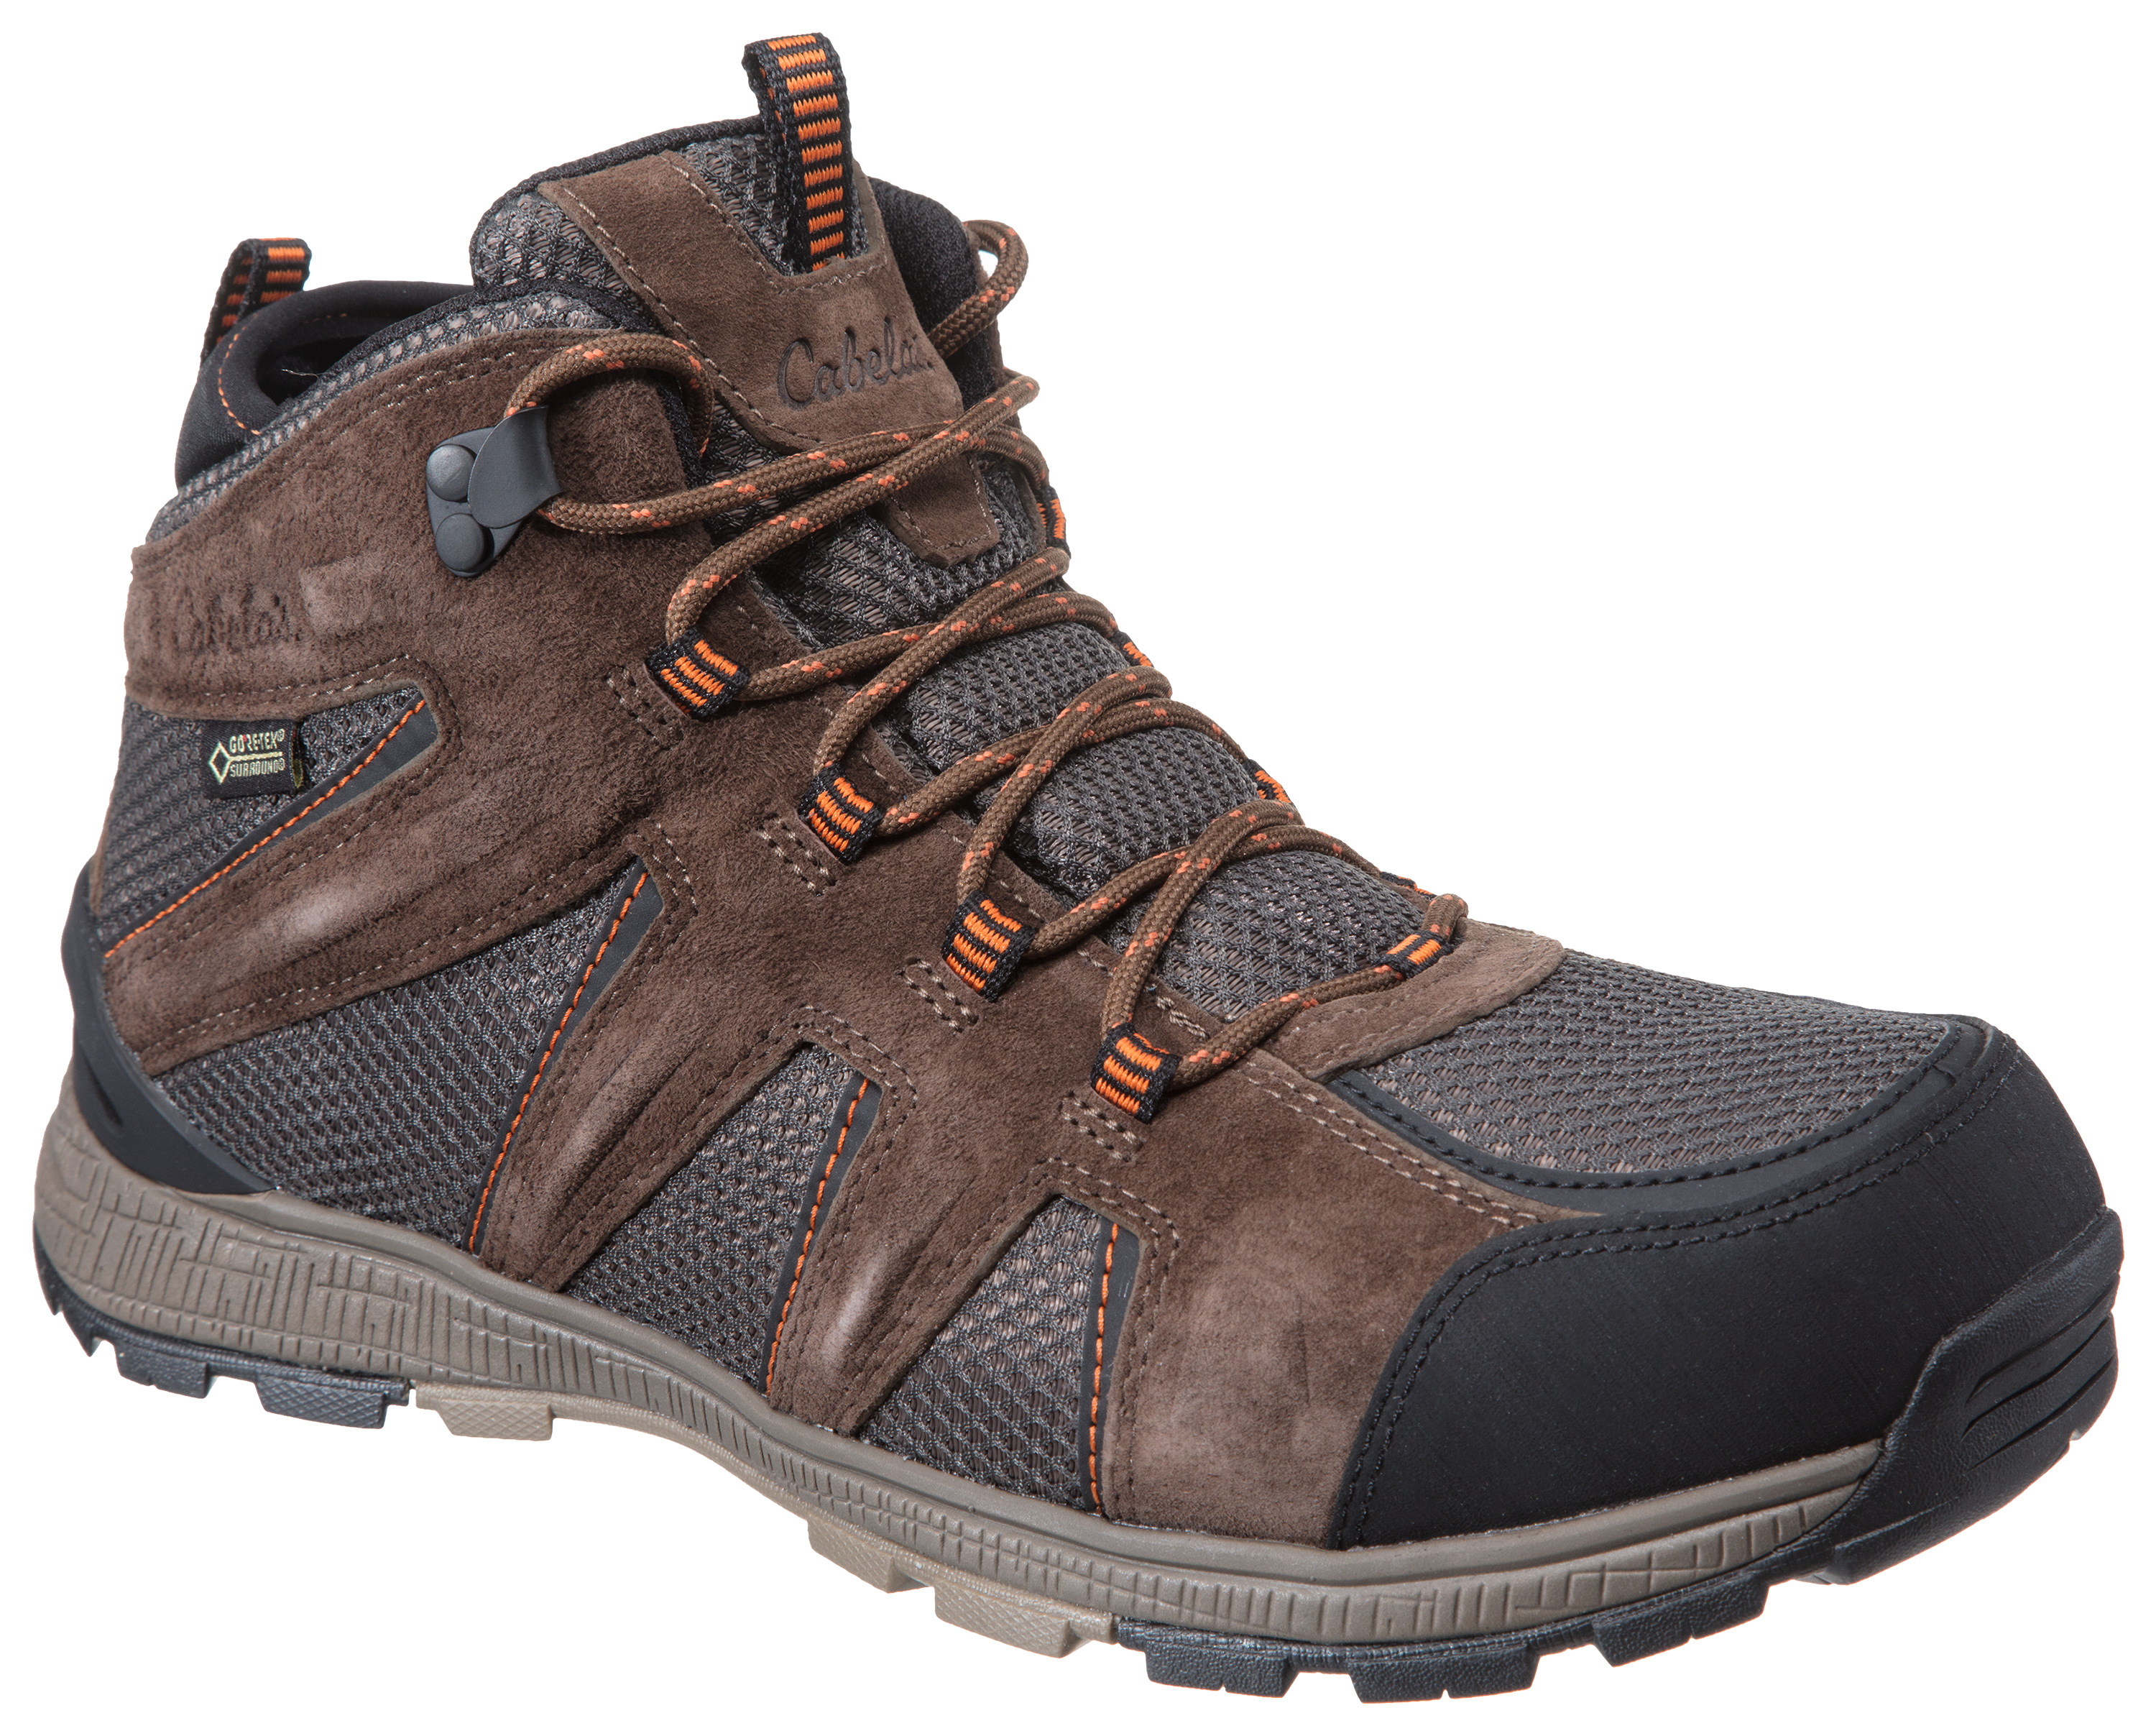 Cabela's 360 Mid GORE-TEX Hiking Boots for Men - Teak - 9M